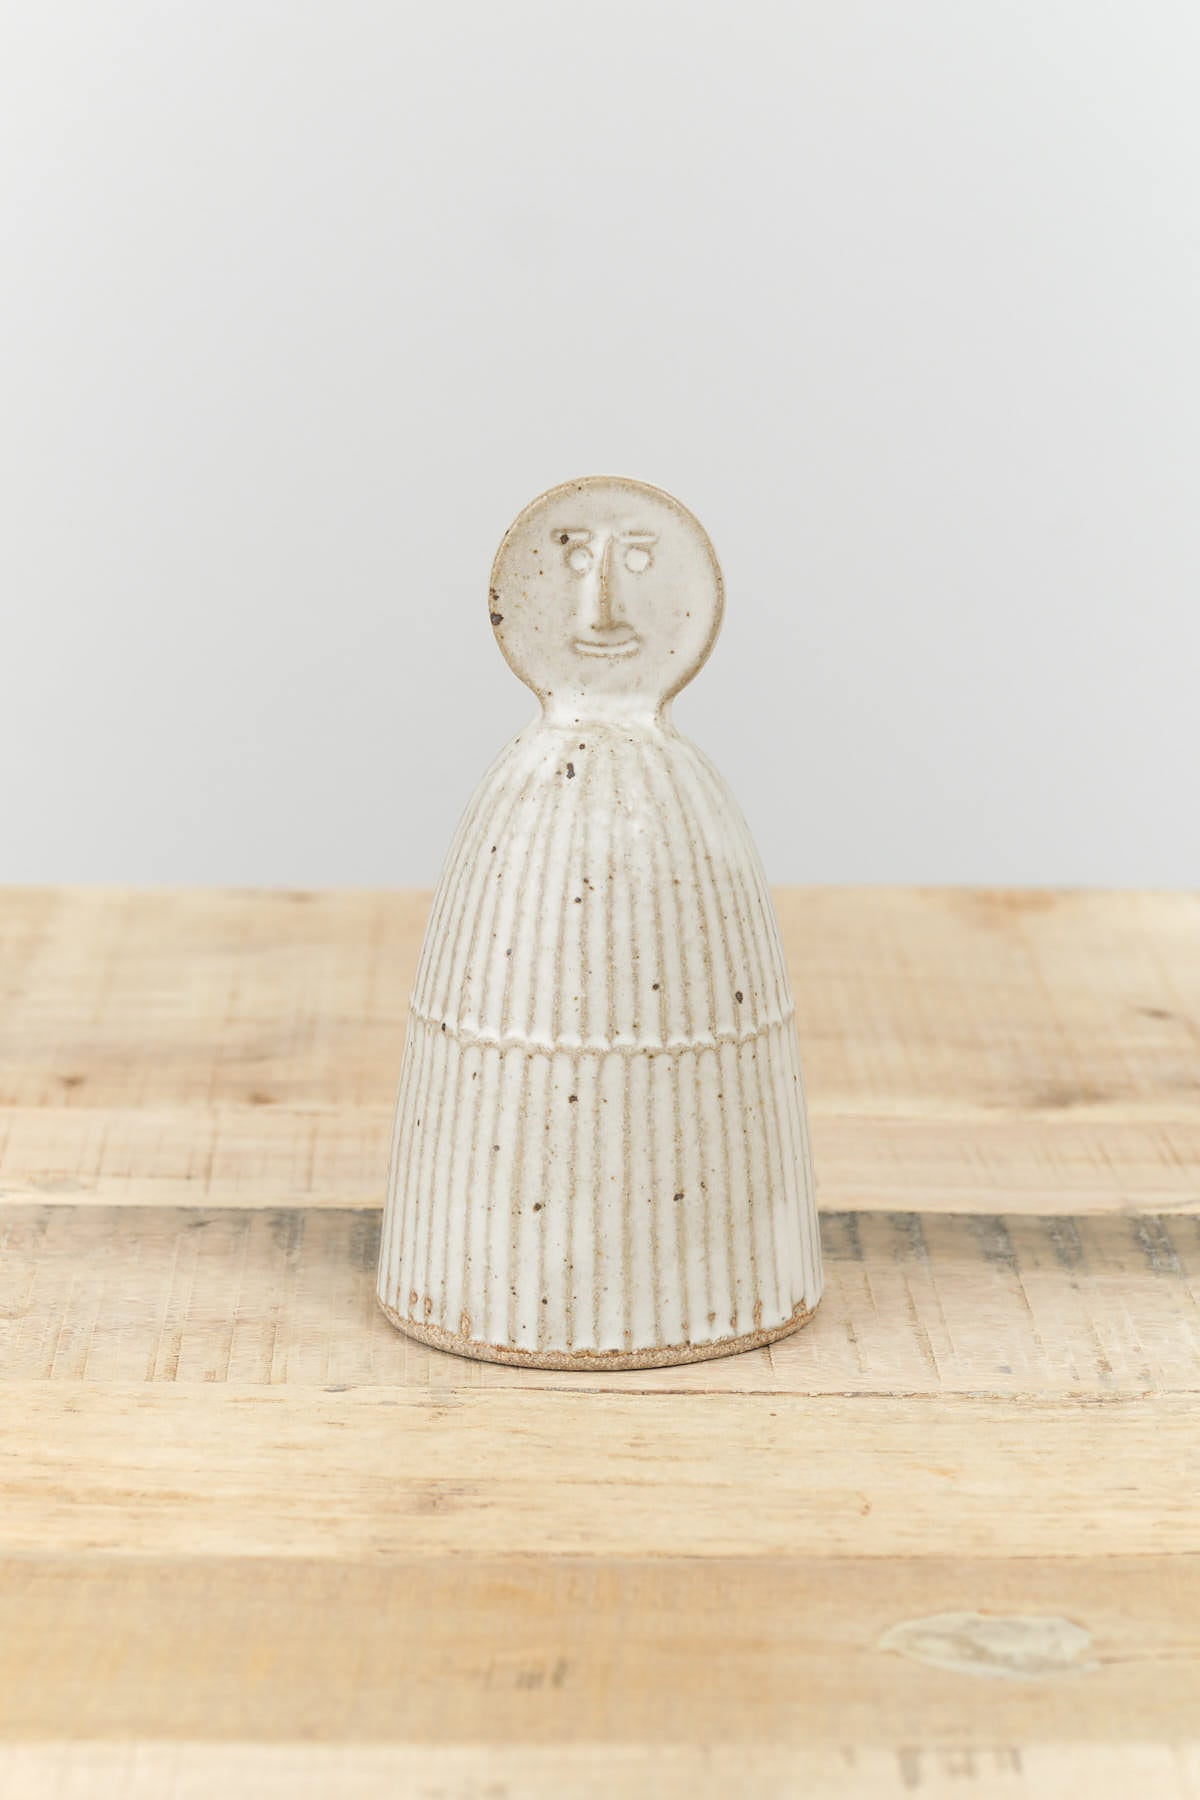 Medium Dinner Bell by Tomoro Pottery